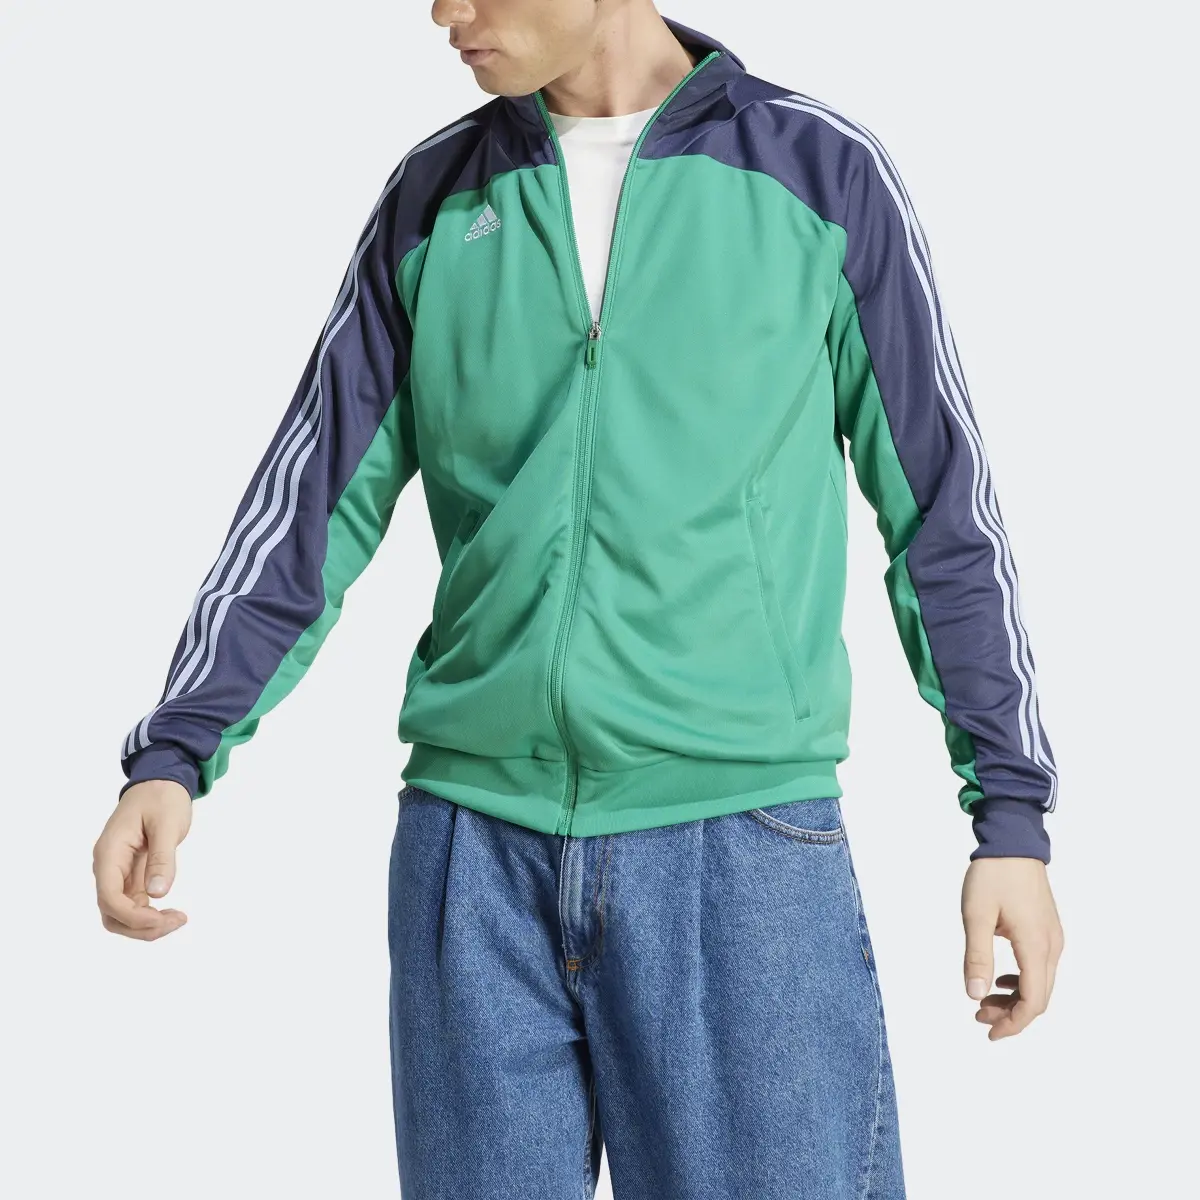 Adidas Tiro Jacket. 1